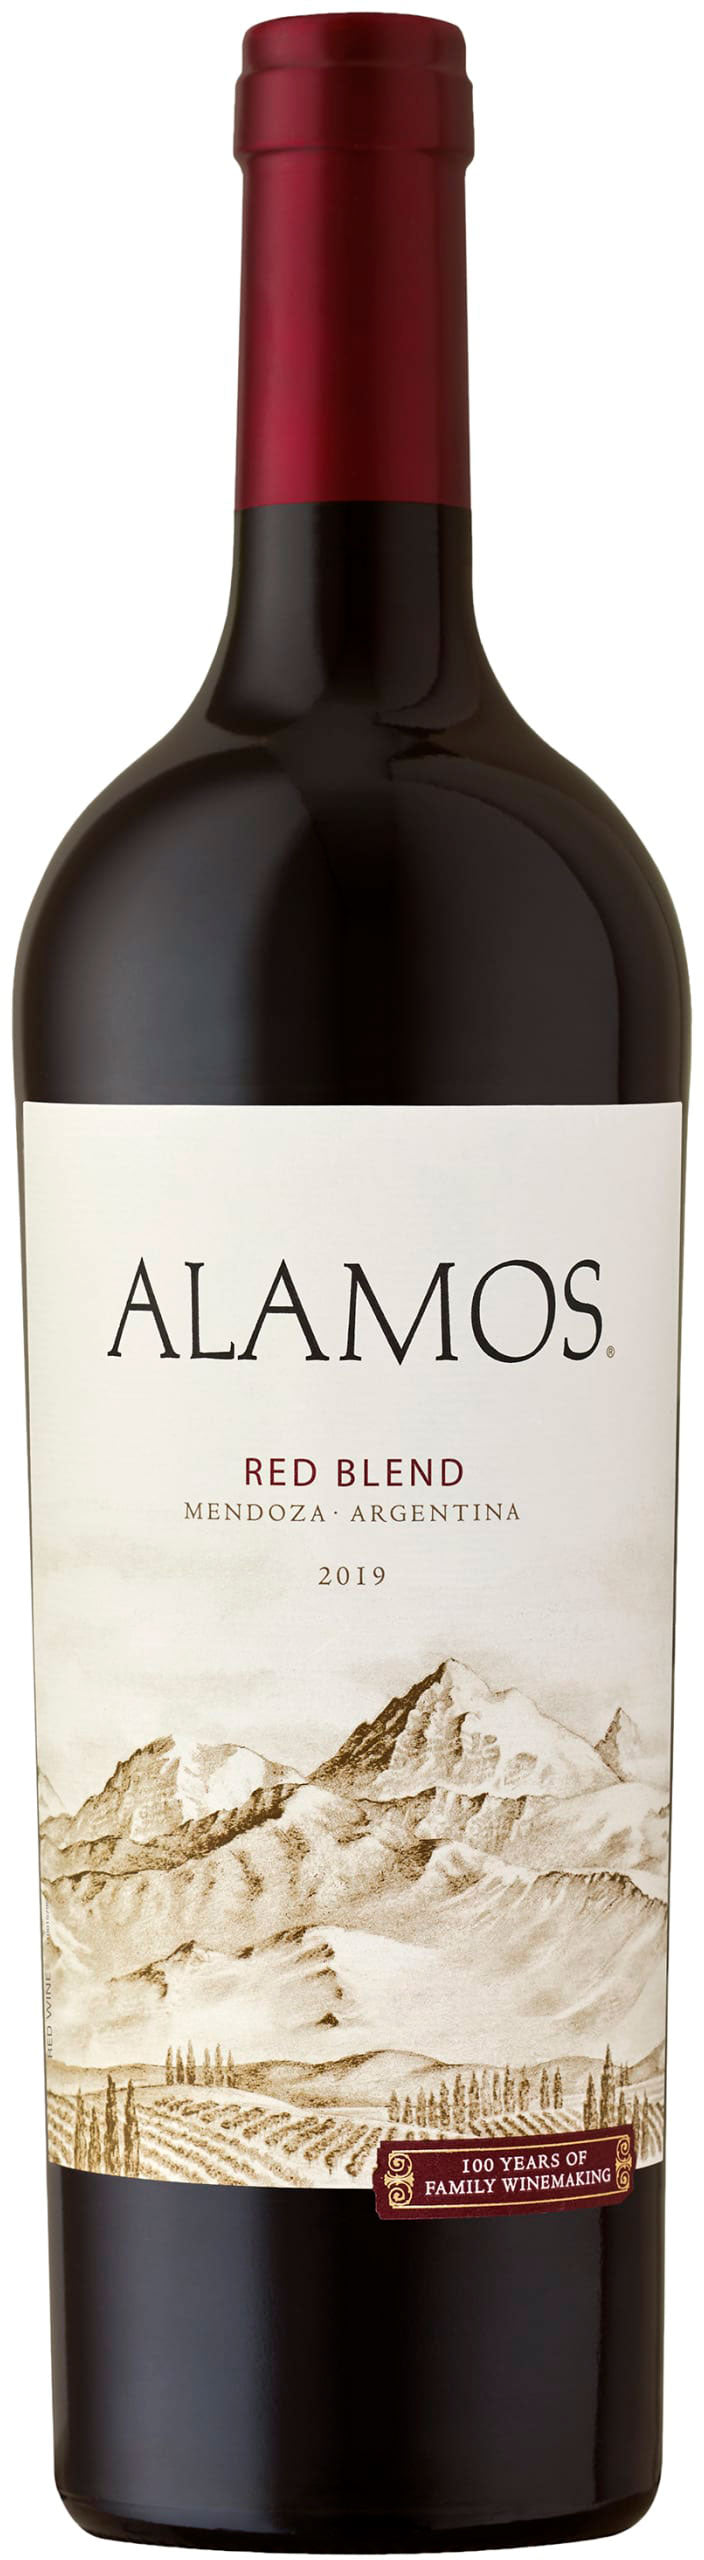 Alamos Red Blend 2019